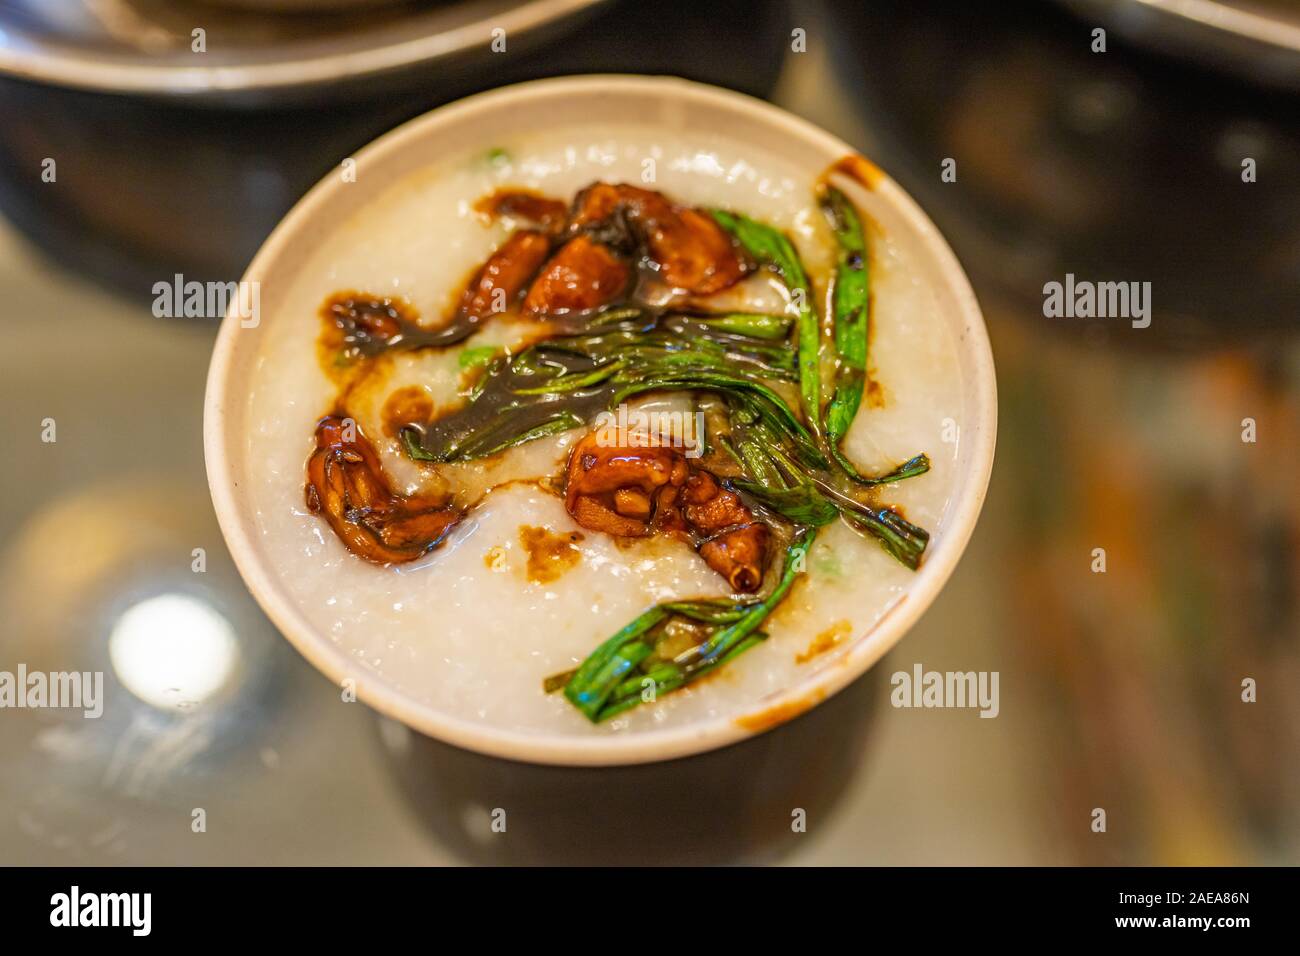 Bowl of delicious Singapore frog porridge in restaurant Stock Photo